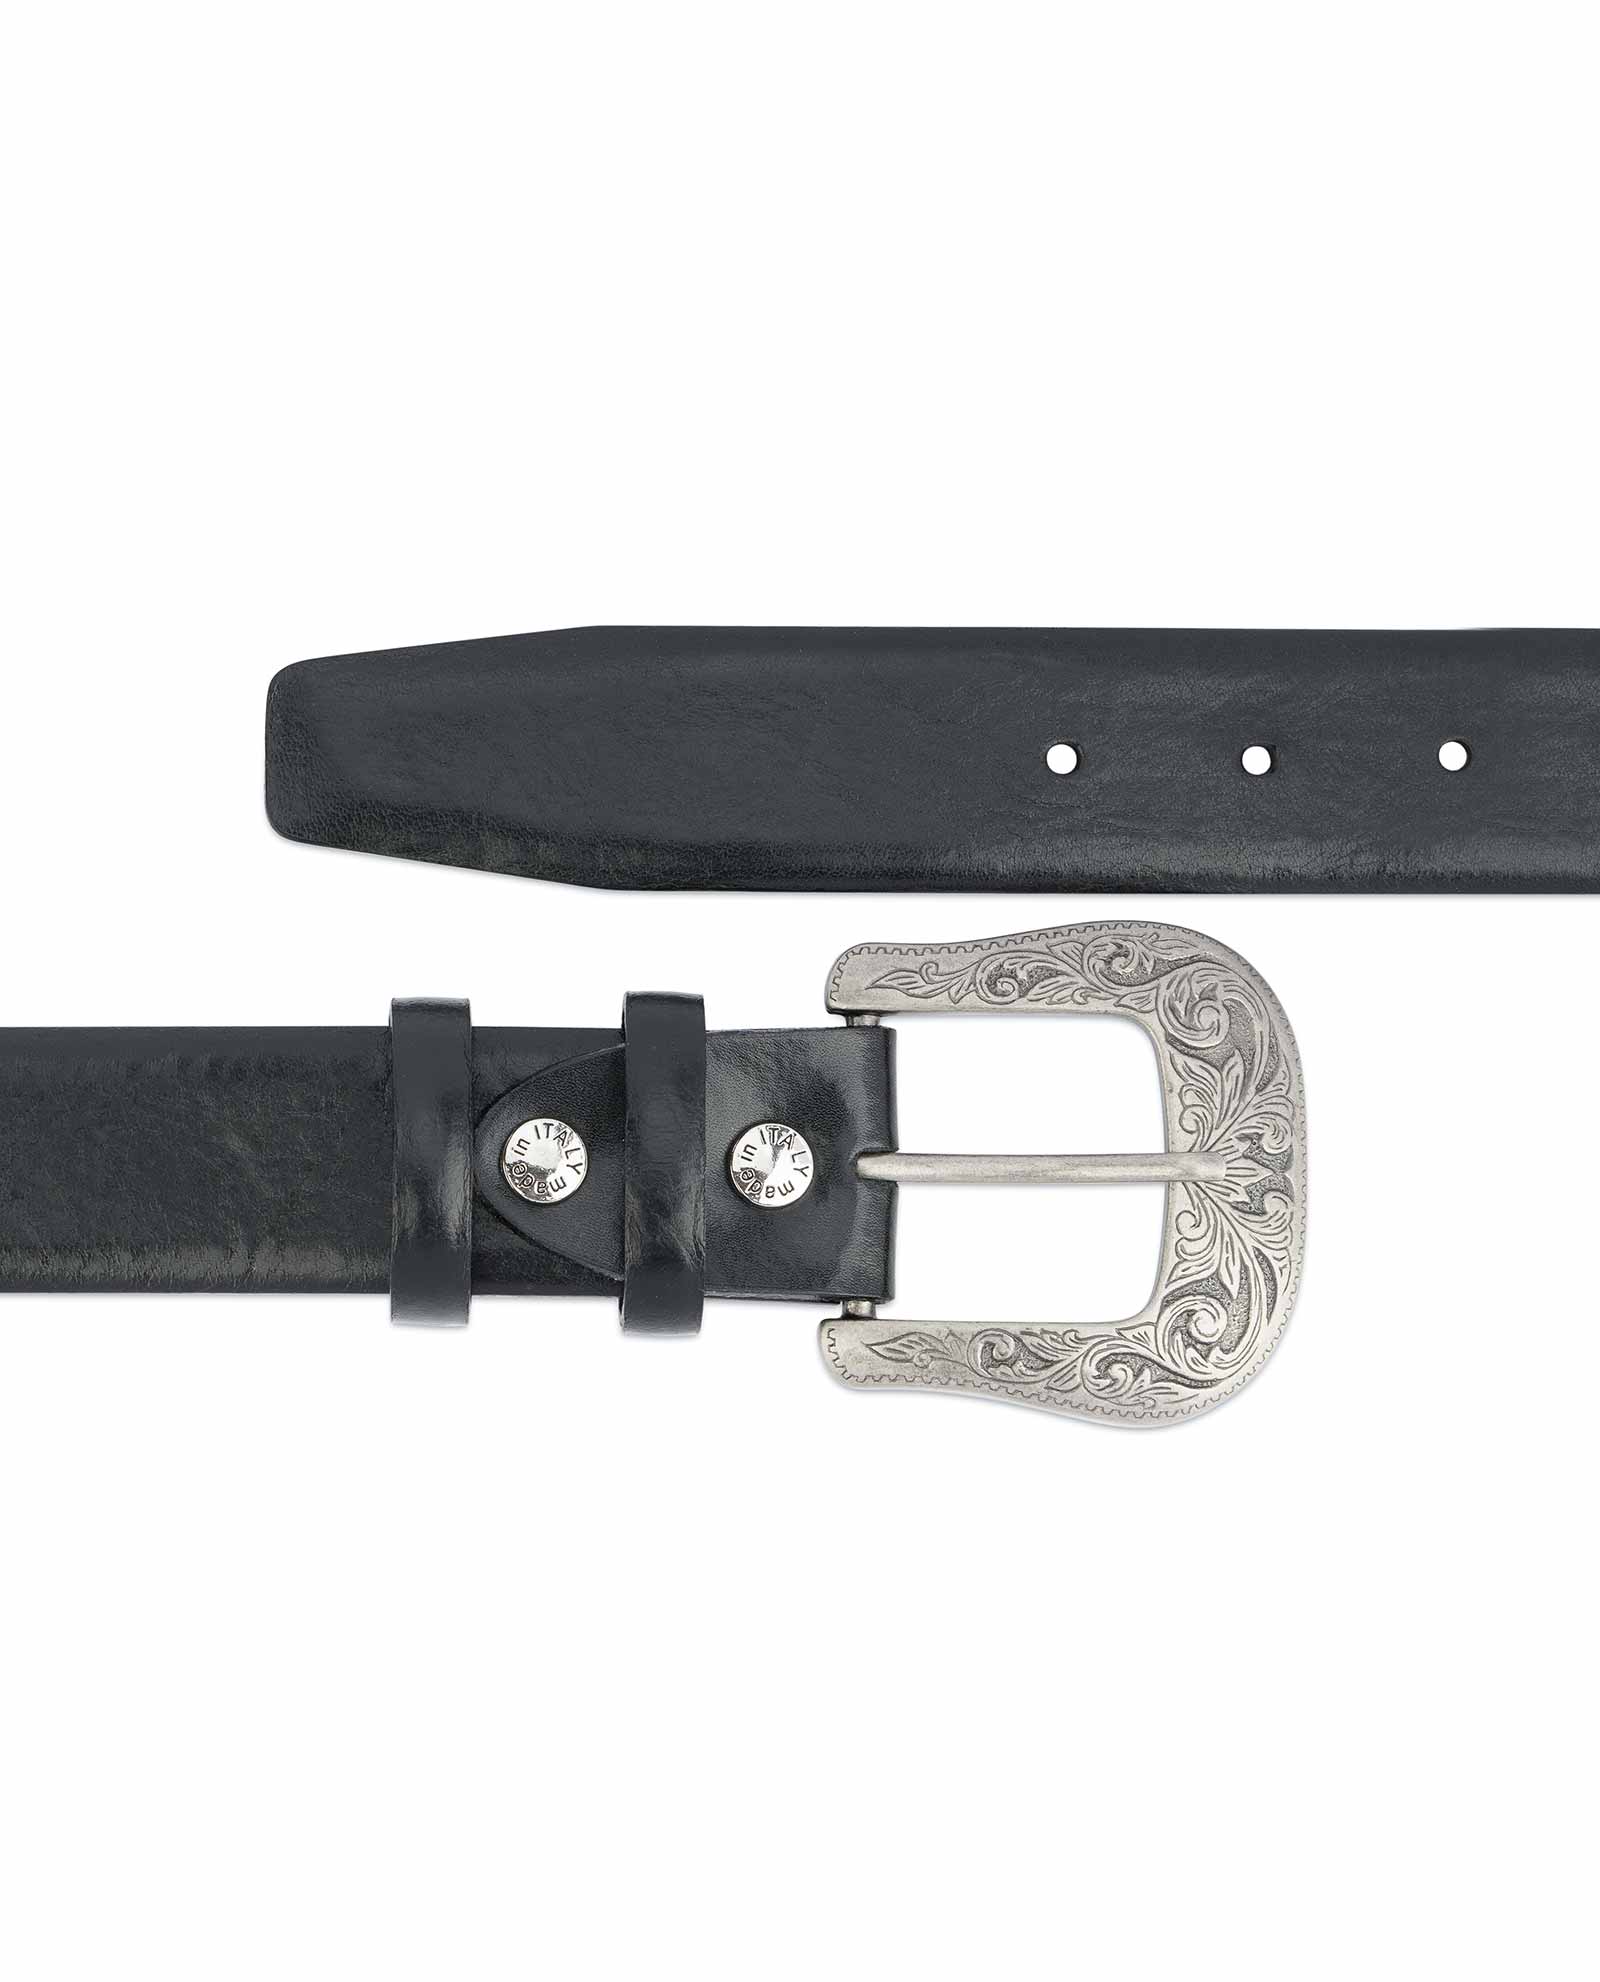 Buy Black Western Belt Mens | Veg Tan Leather | LeatherBeltsOnline.com